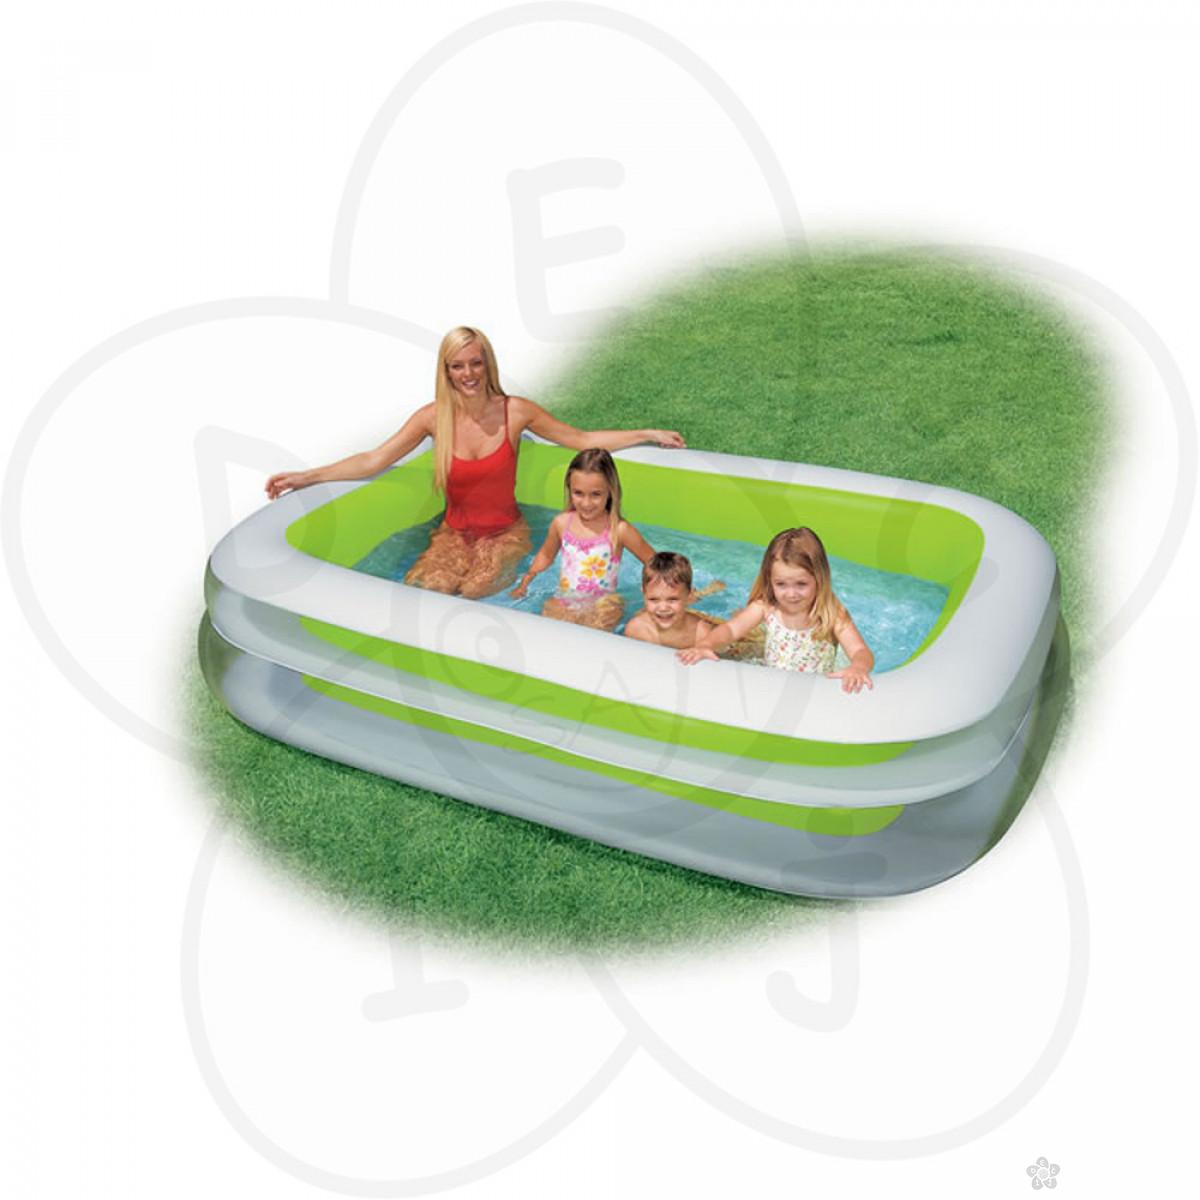 Intex bazen za decu na naduvavanje 262x175x56cm 